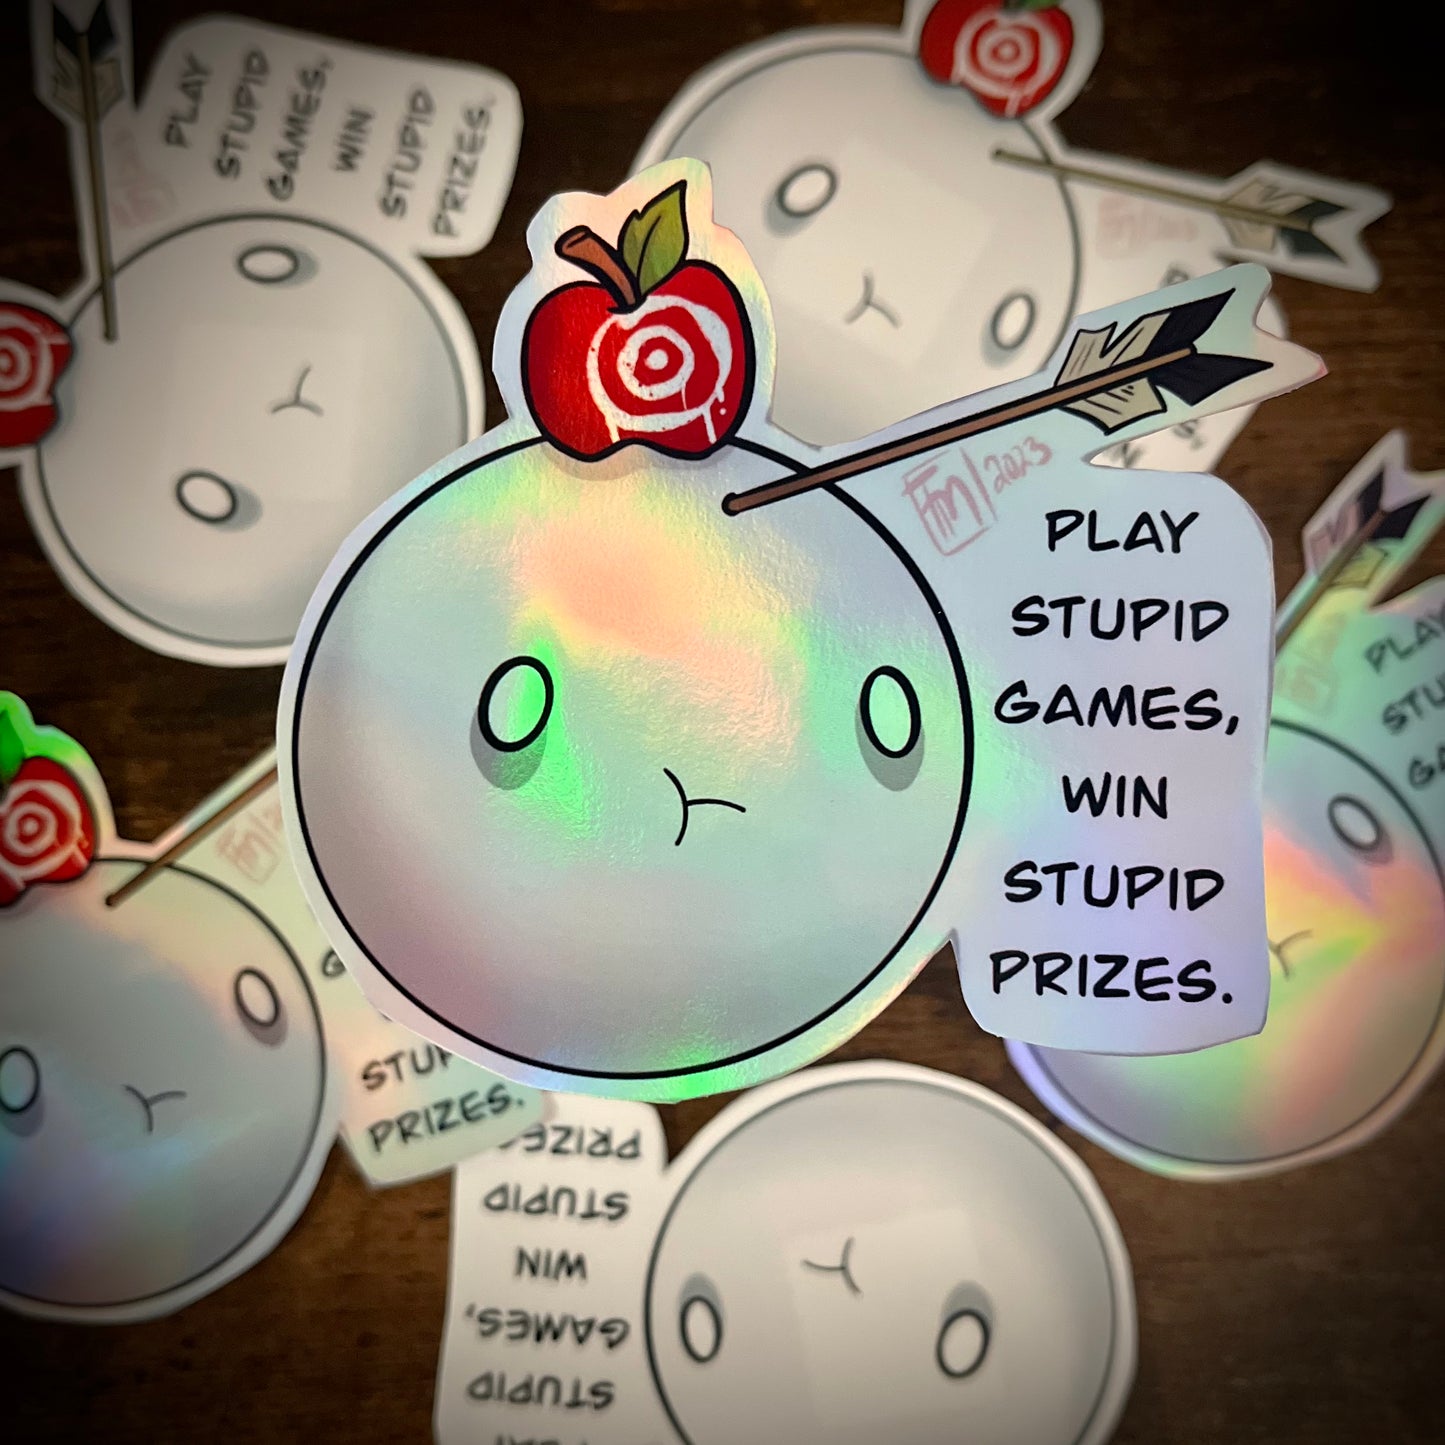 “Play Stupid Games” Sticker